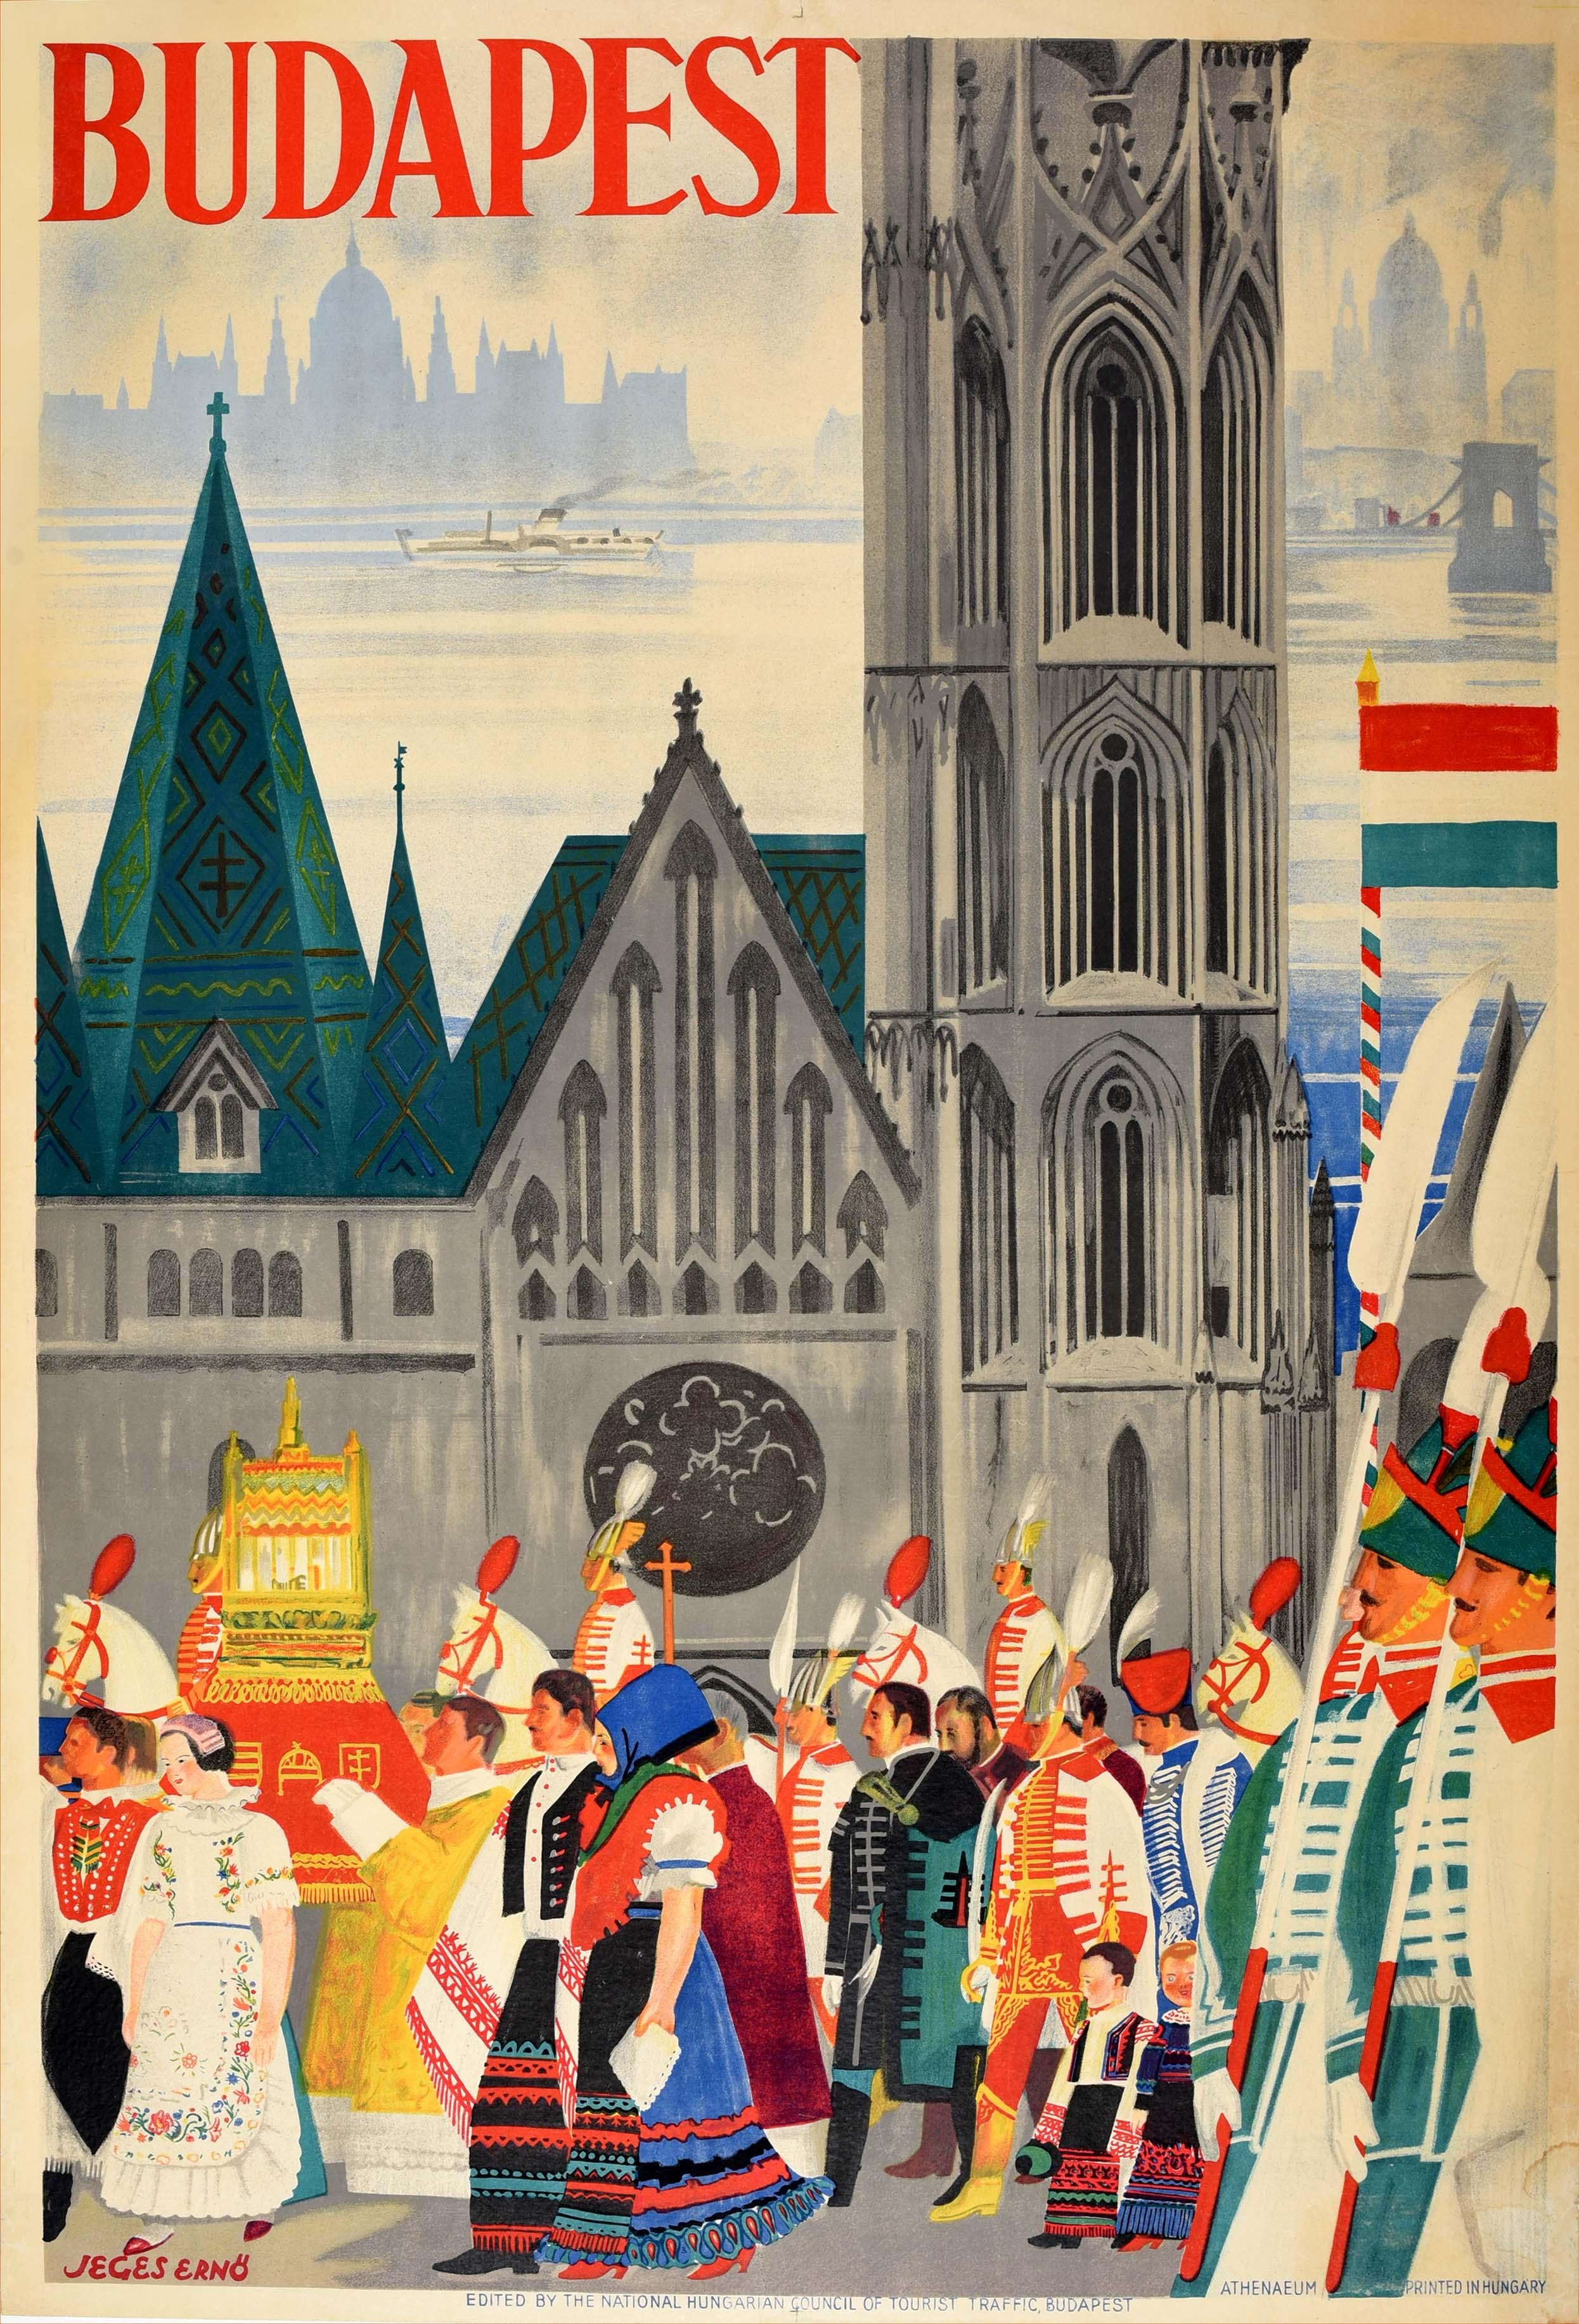 Jeges Erno Print - Original Vintage Travel Poster Budapest Art Deco Festival Hungary Church Design